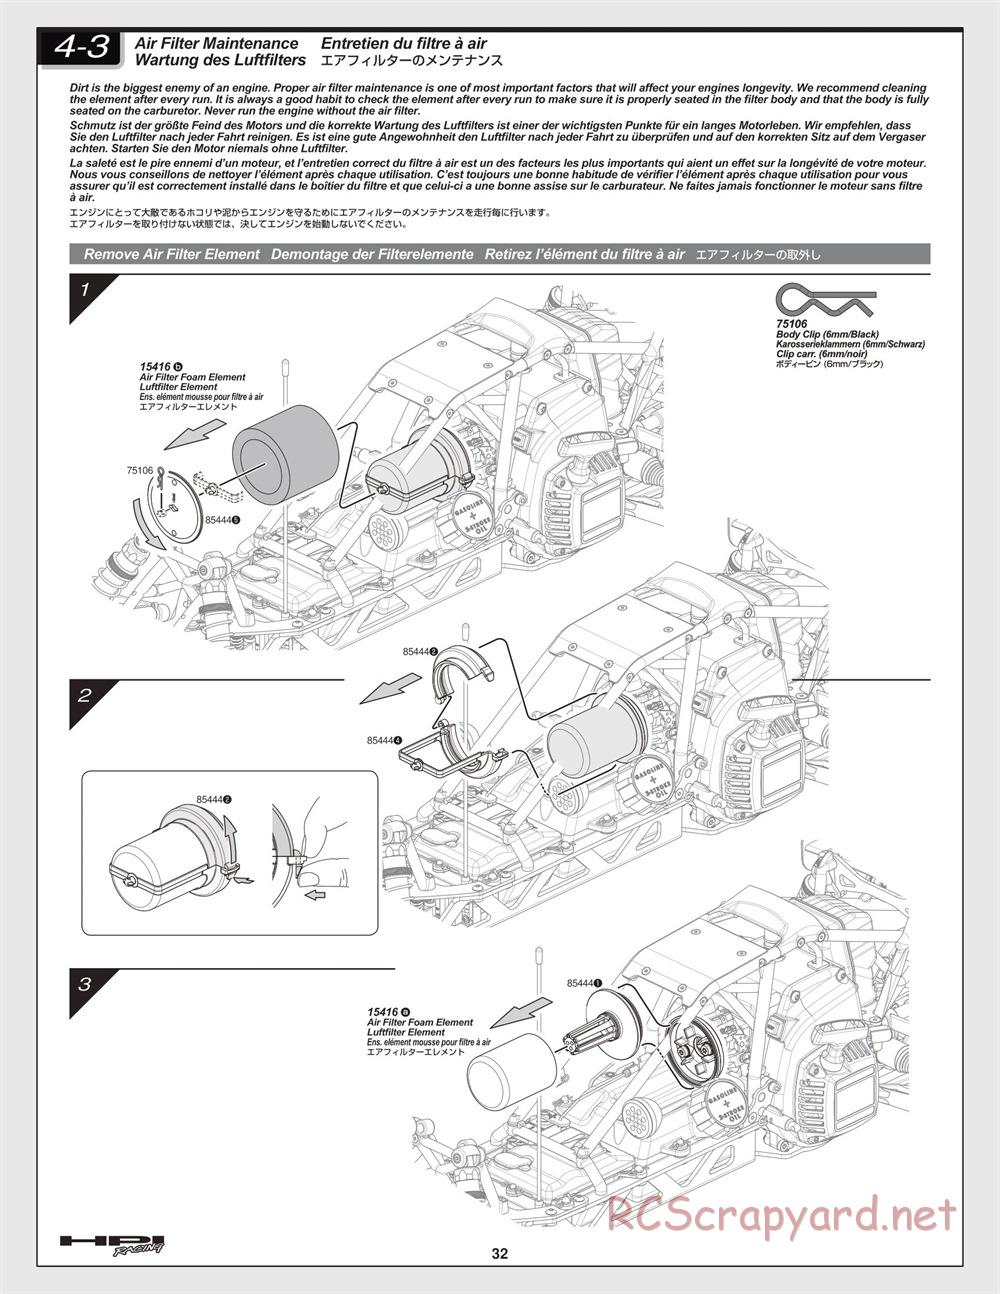 HPI - Baja 5B 2.0 - Manual - Page 32